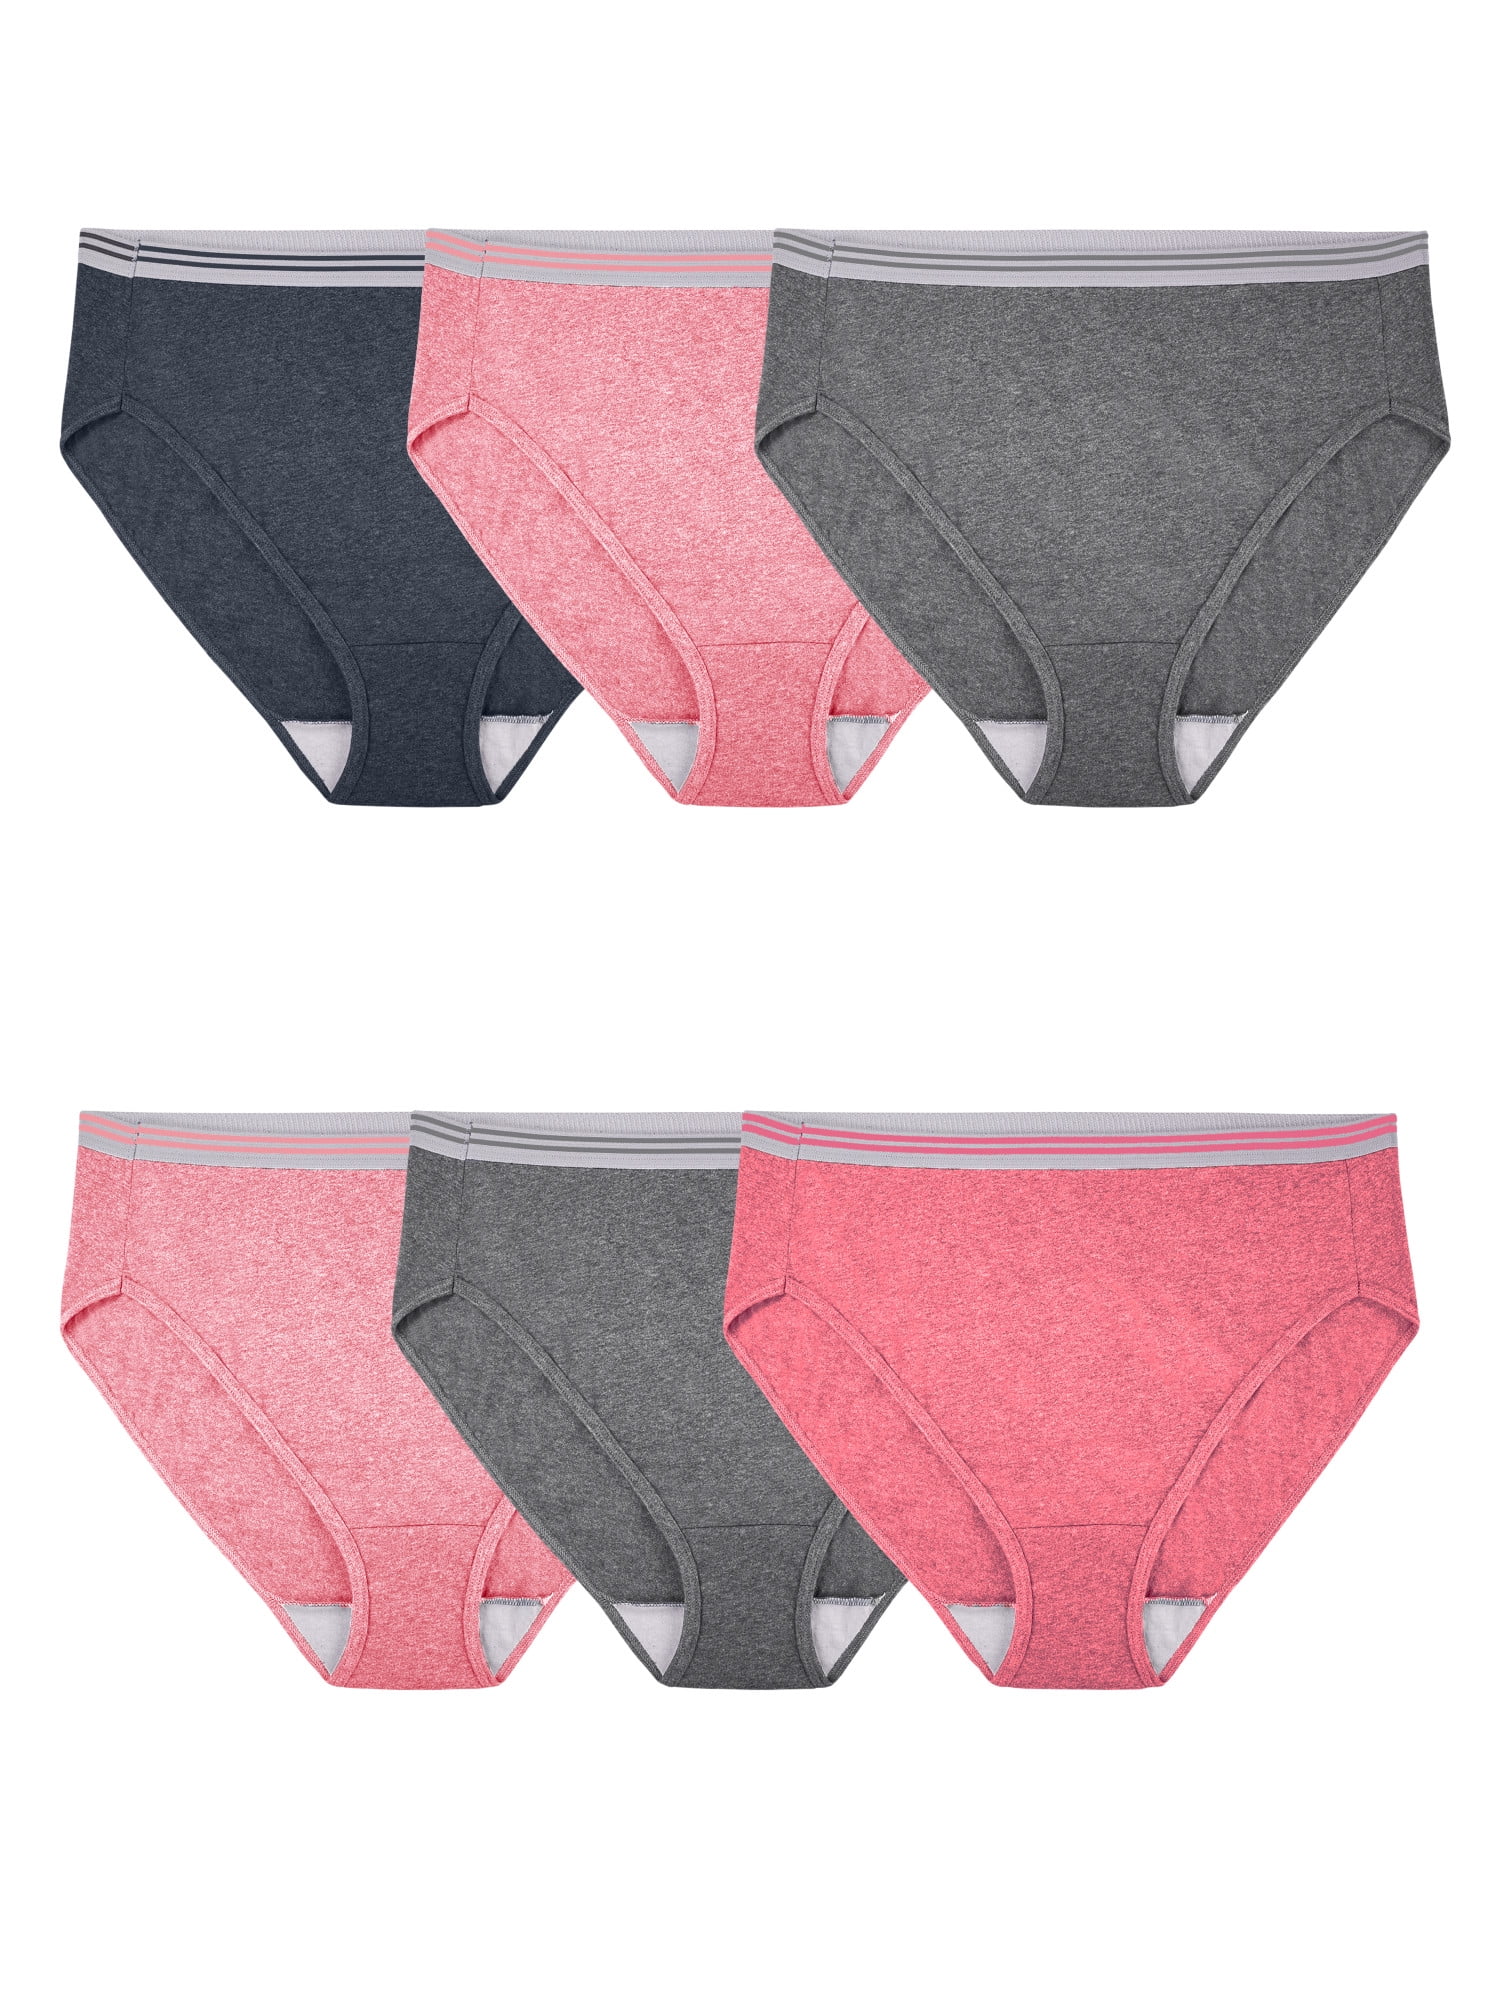 Buy Red Panties for Women by FRUIT OF THE LOOM Online